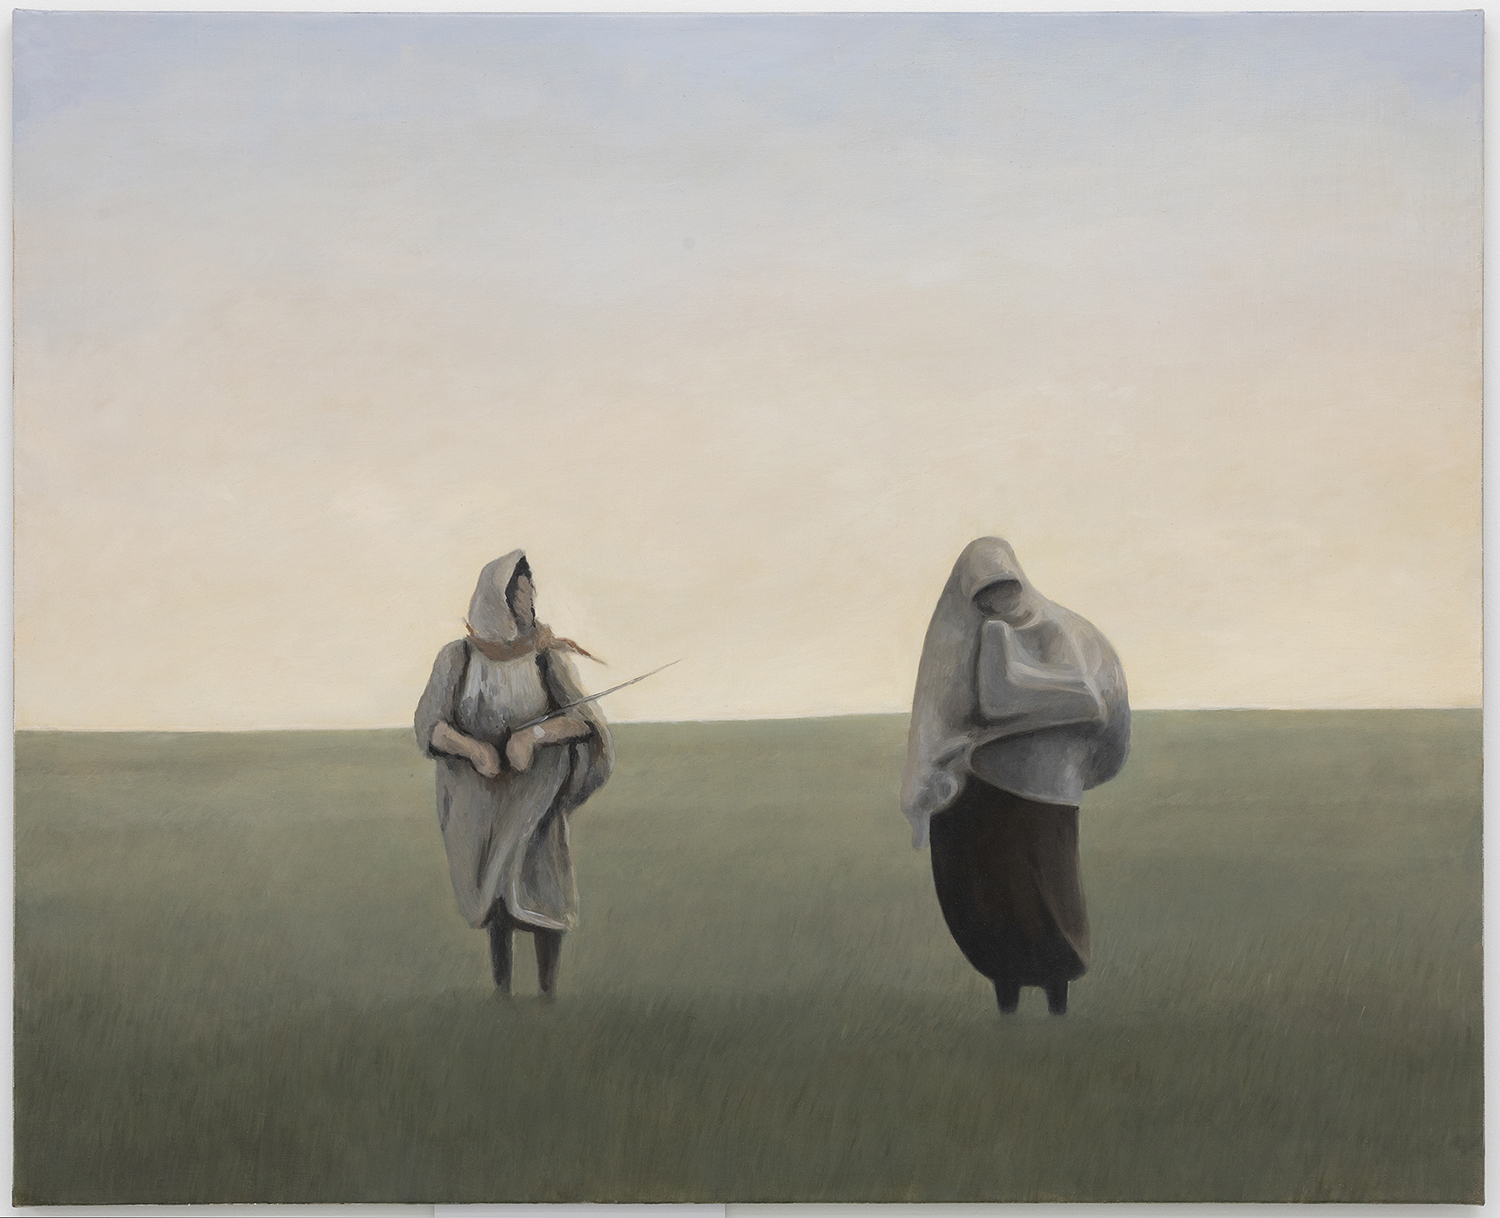 Johannes Sivertsen, Women of Mount Chenoua (after Assia Djebar), 2020, oil on canvas, 81 x 100 cm